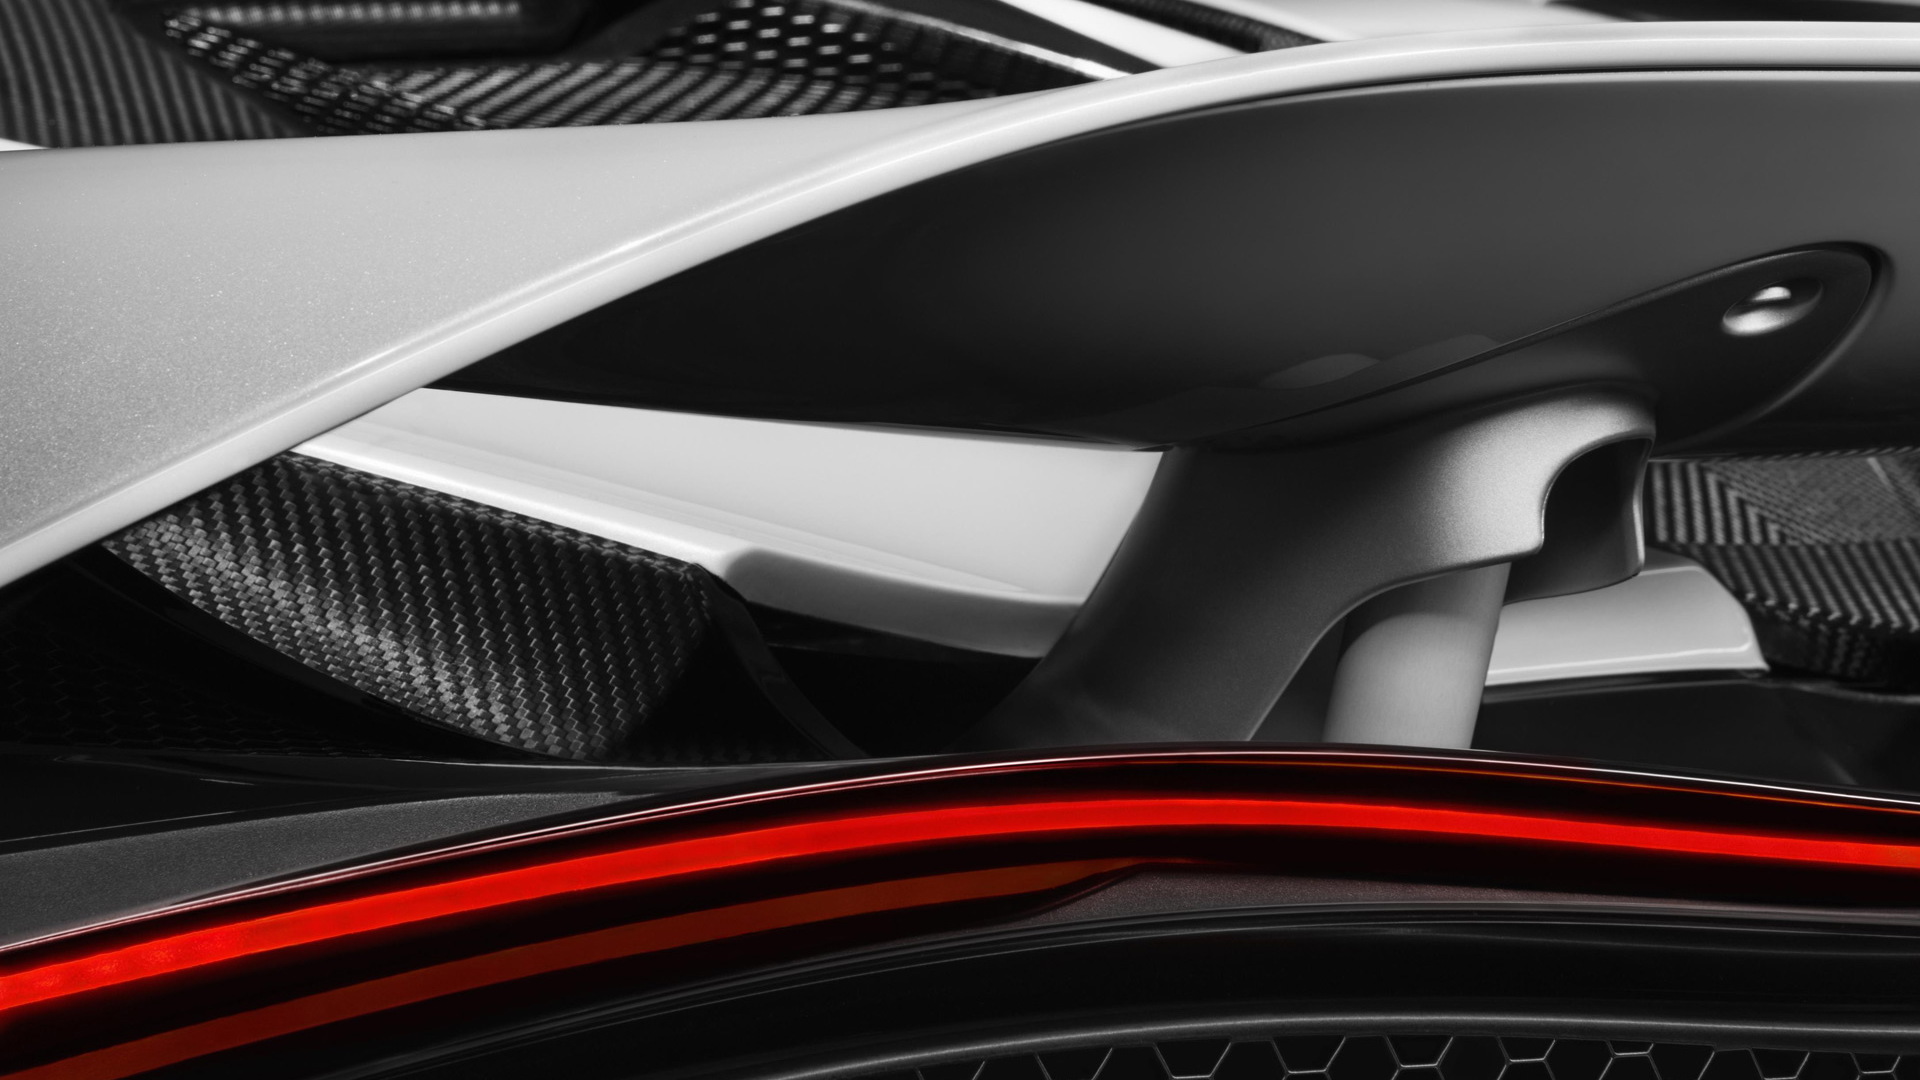 Teaser for new McLaren Super Series model debuting at 2017 Geneva auto show